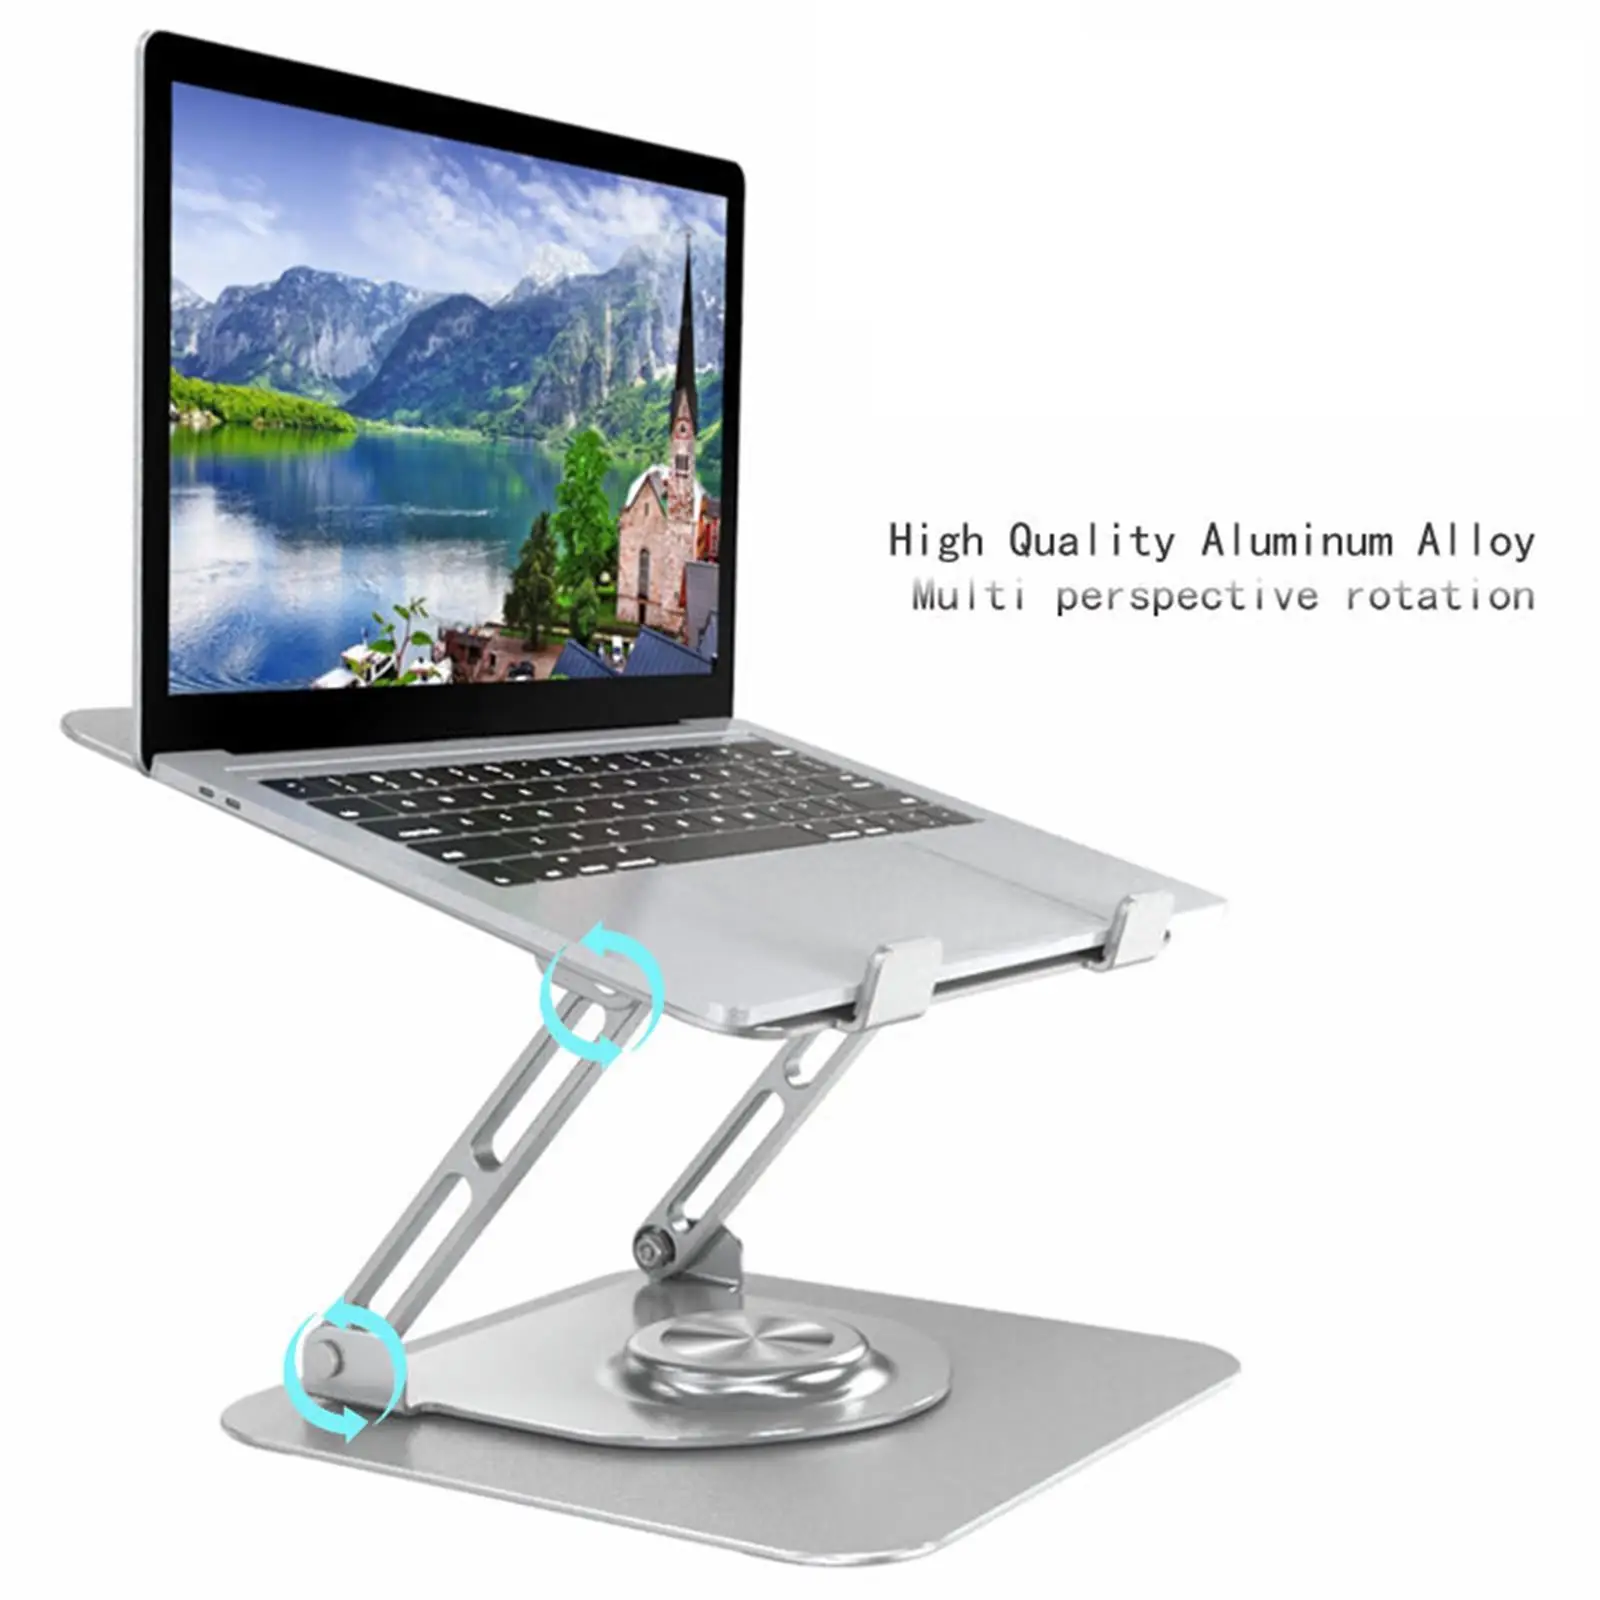 All Aluminium Laptop Stand 360 Degree Rotation Desktop Stand Holder Adjustable Laptops Elevator Laptop Riser for Notebooks